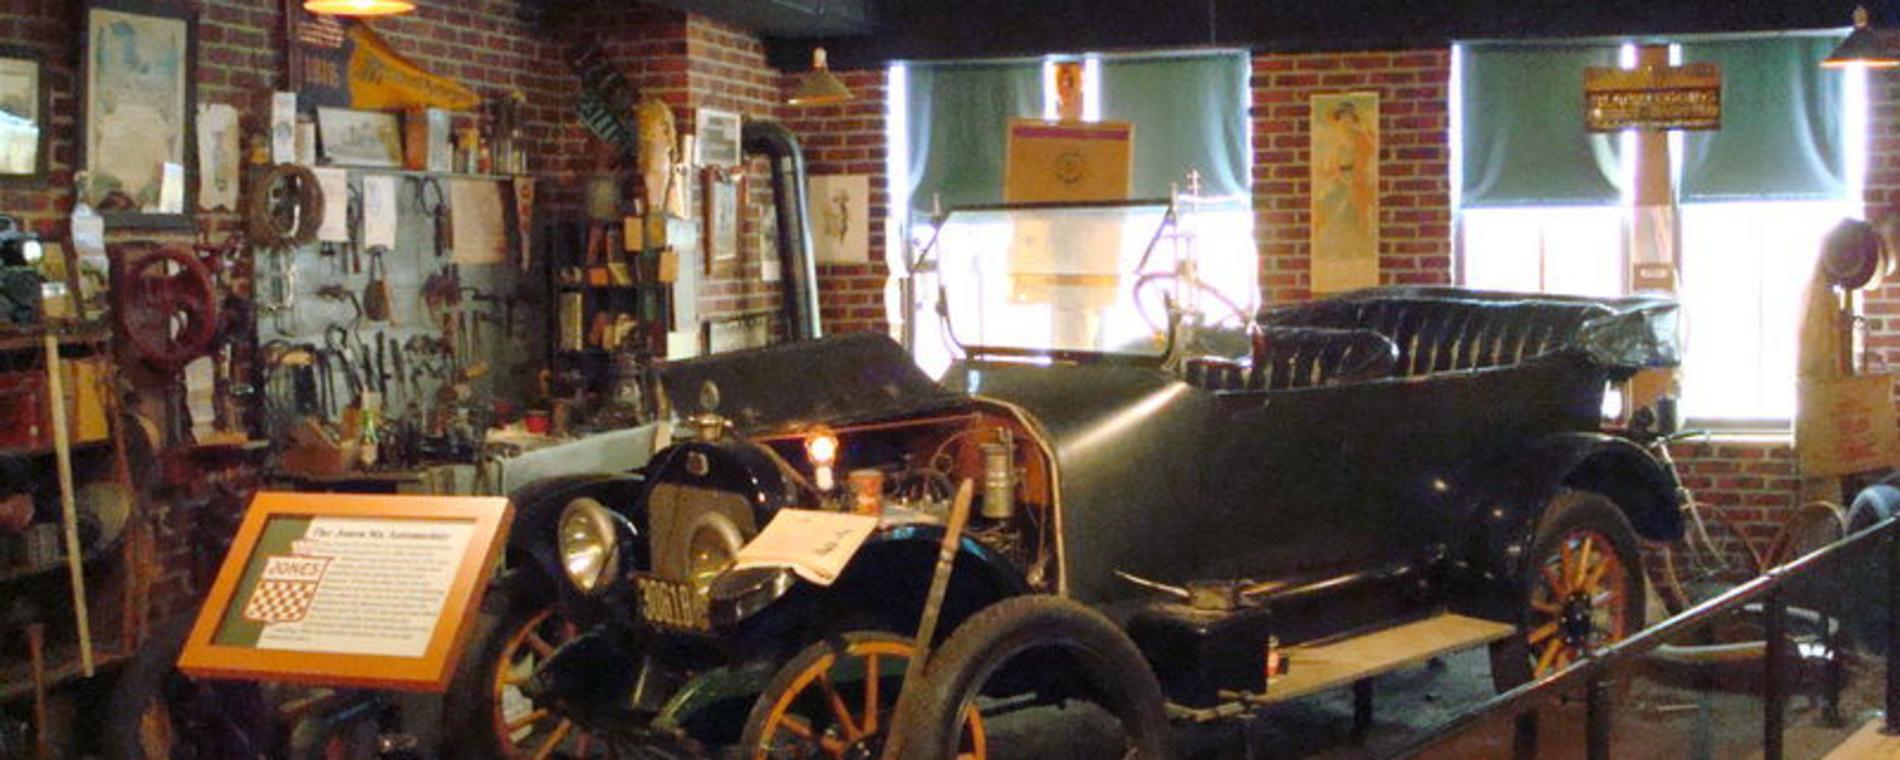 The Wichita-Sedgwick County Historical Museum